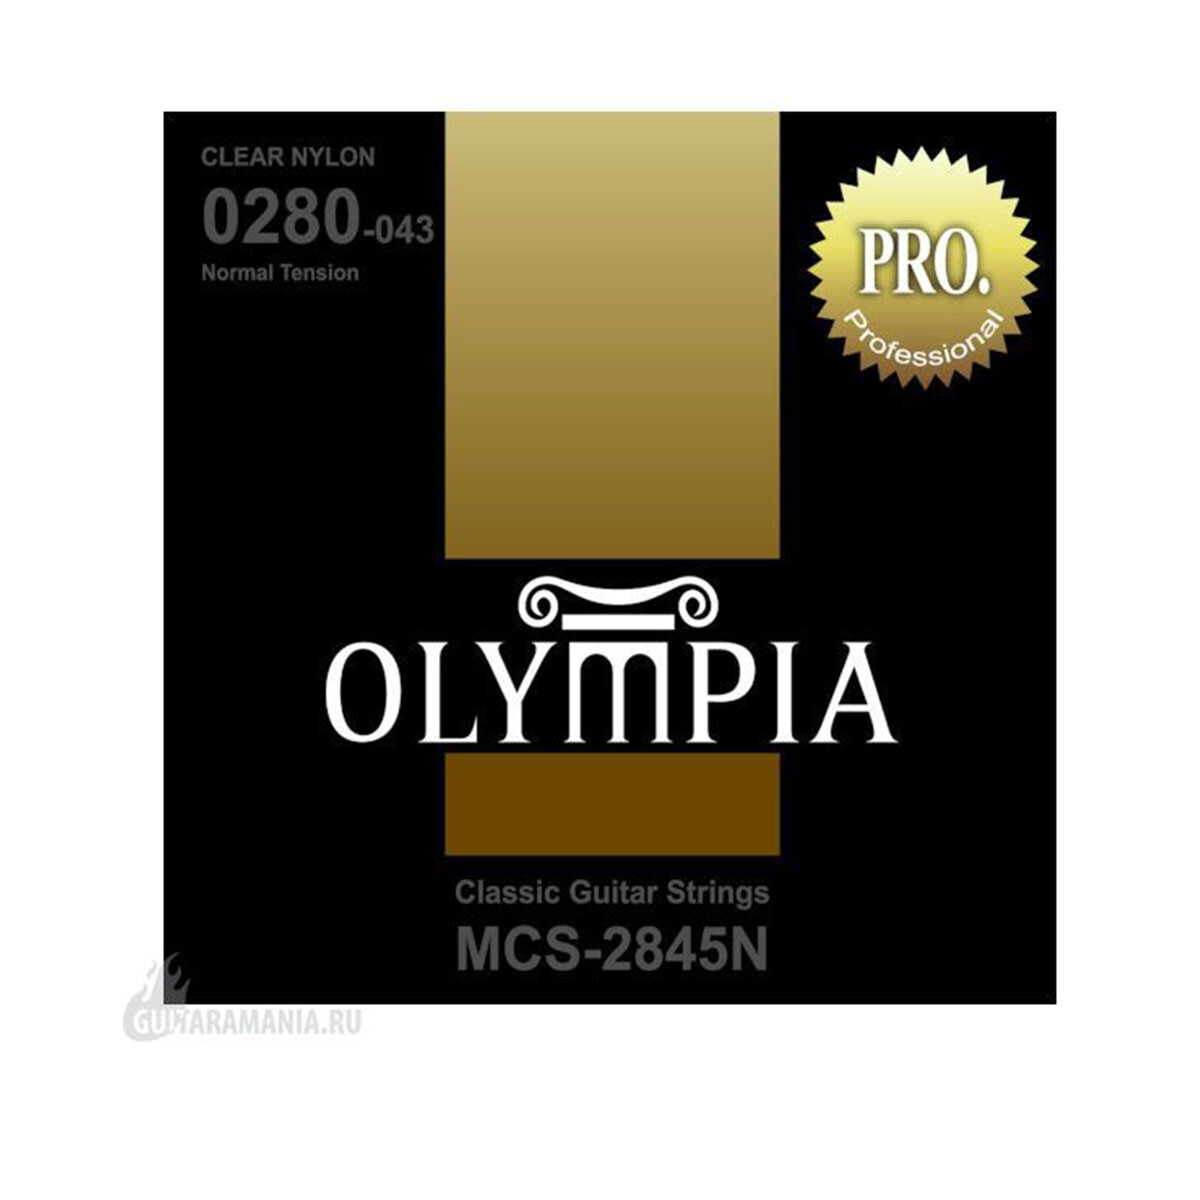 Encordado Clasica Olympia Mcs29845n Pro Classic Tension Normal 